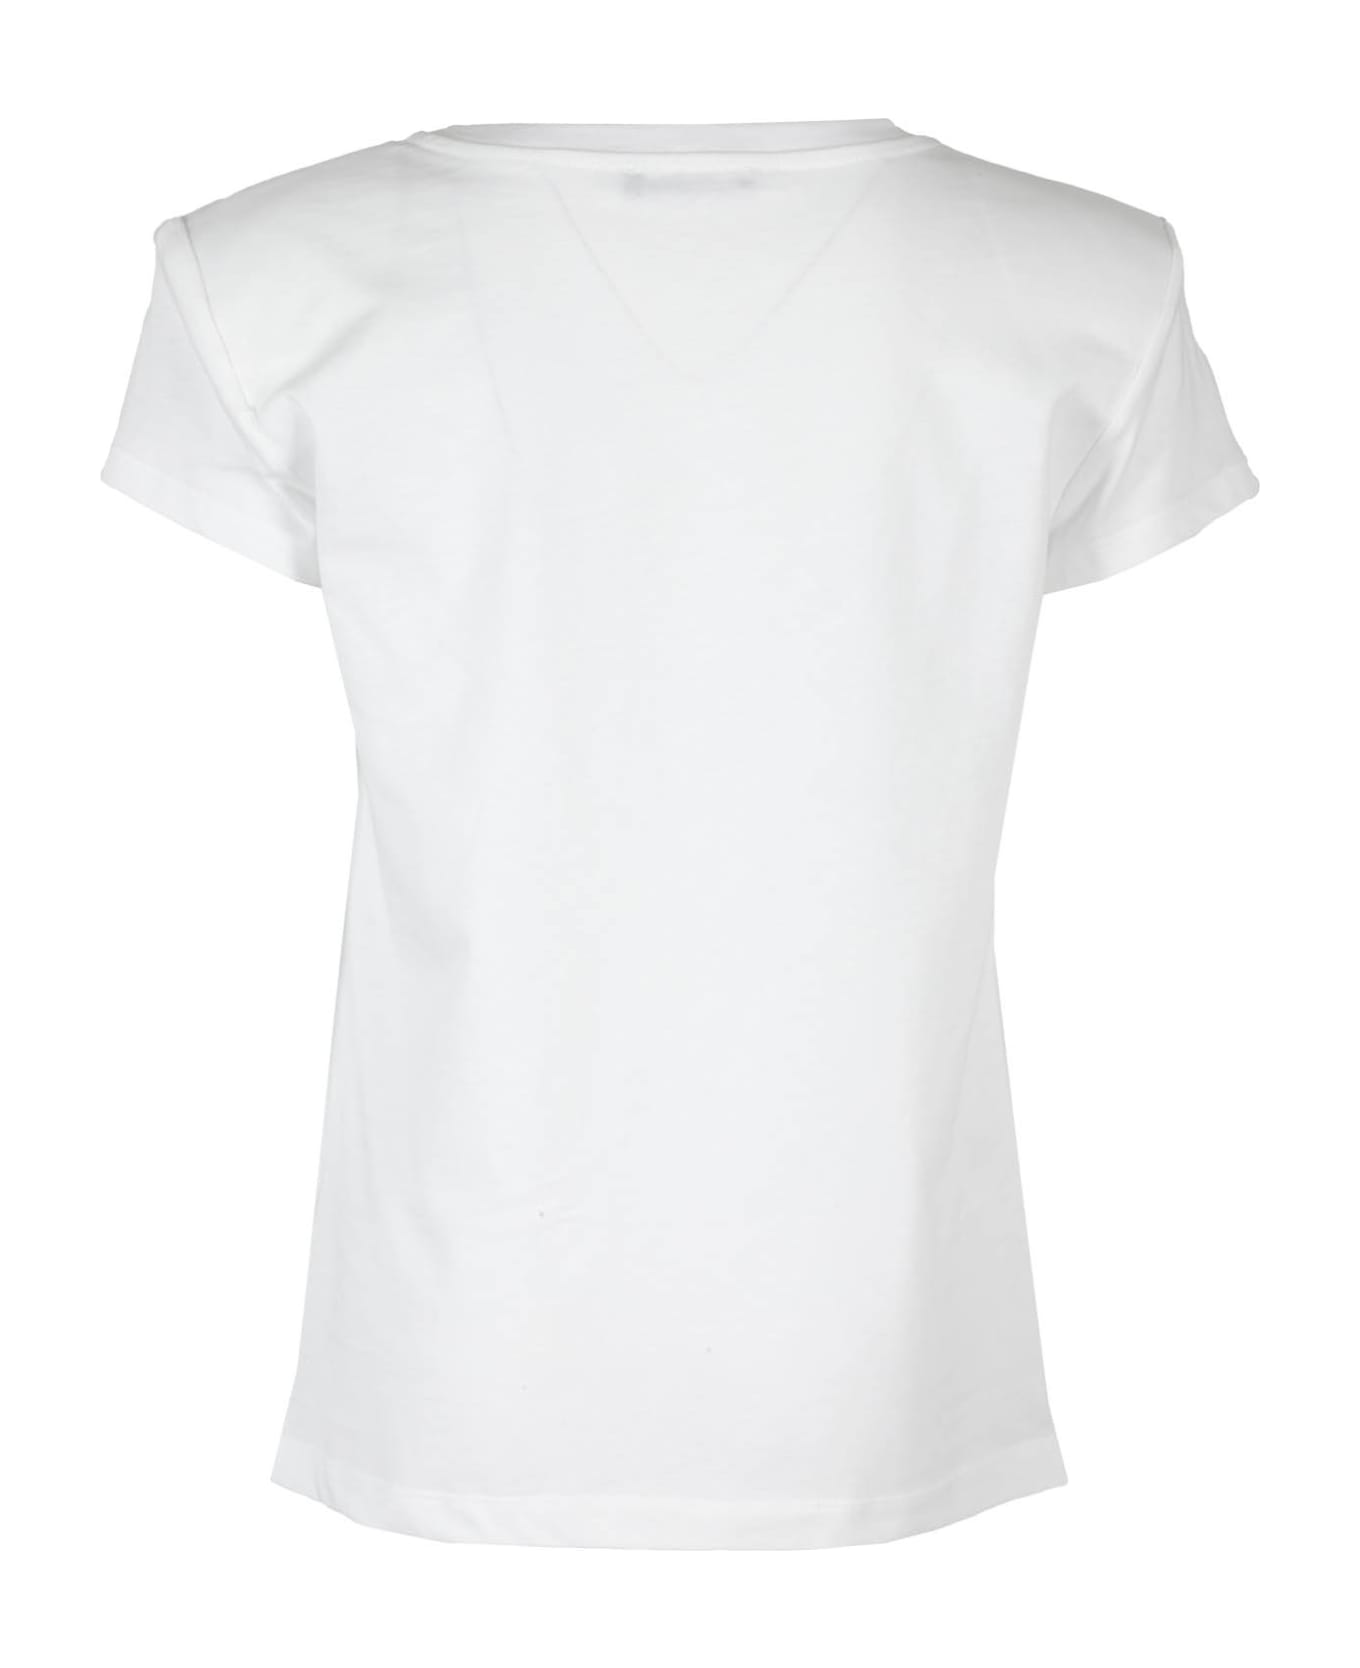 Balmain Tshirt - White